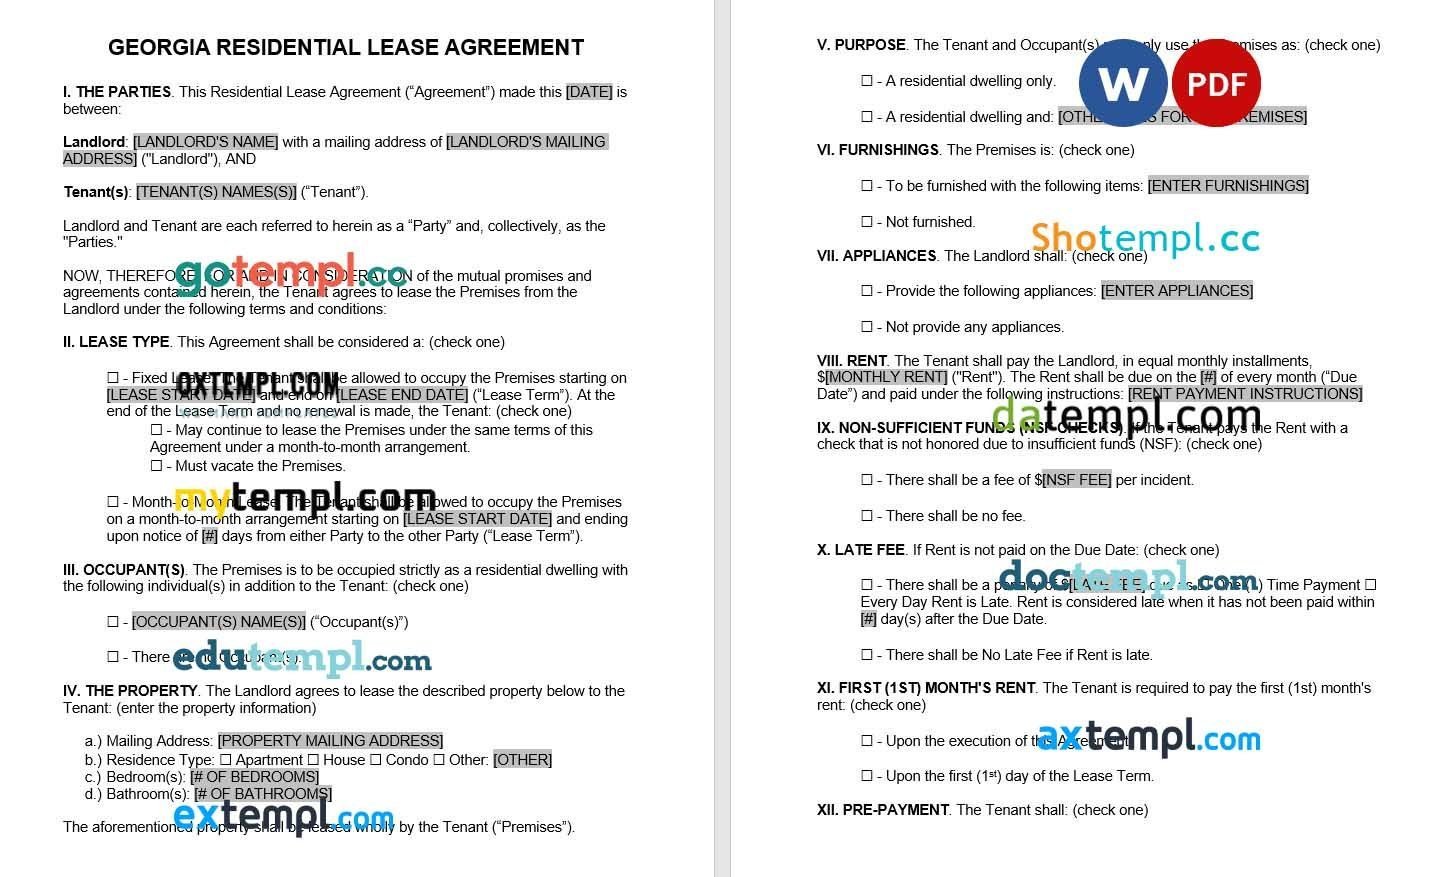 Georgian Standard Residential Lease Agreement Word example, fully editable